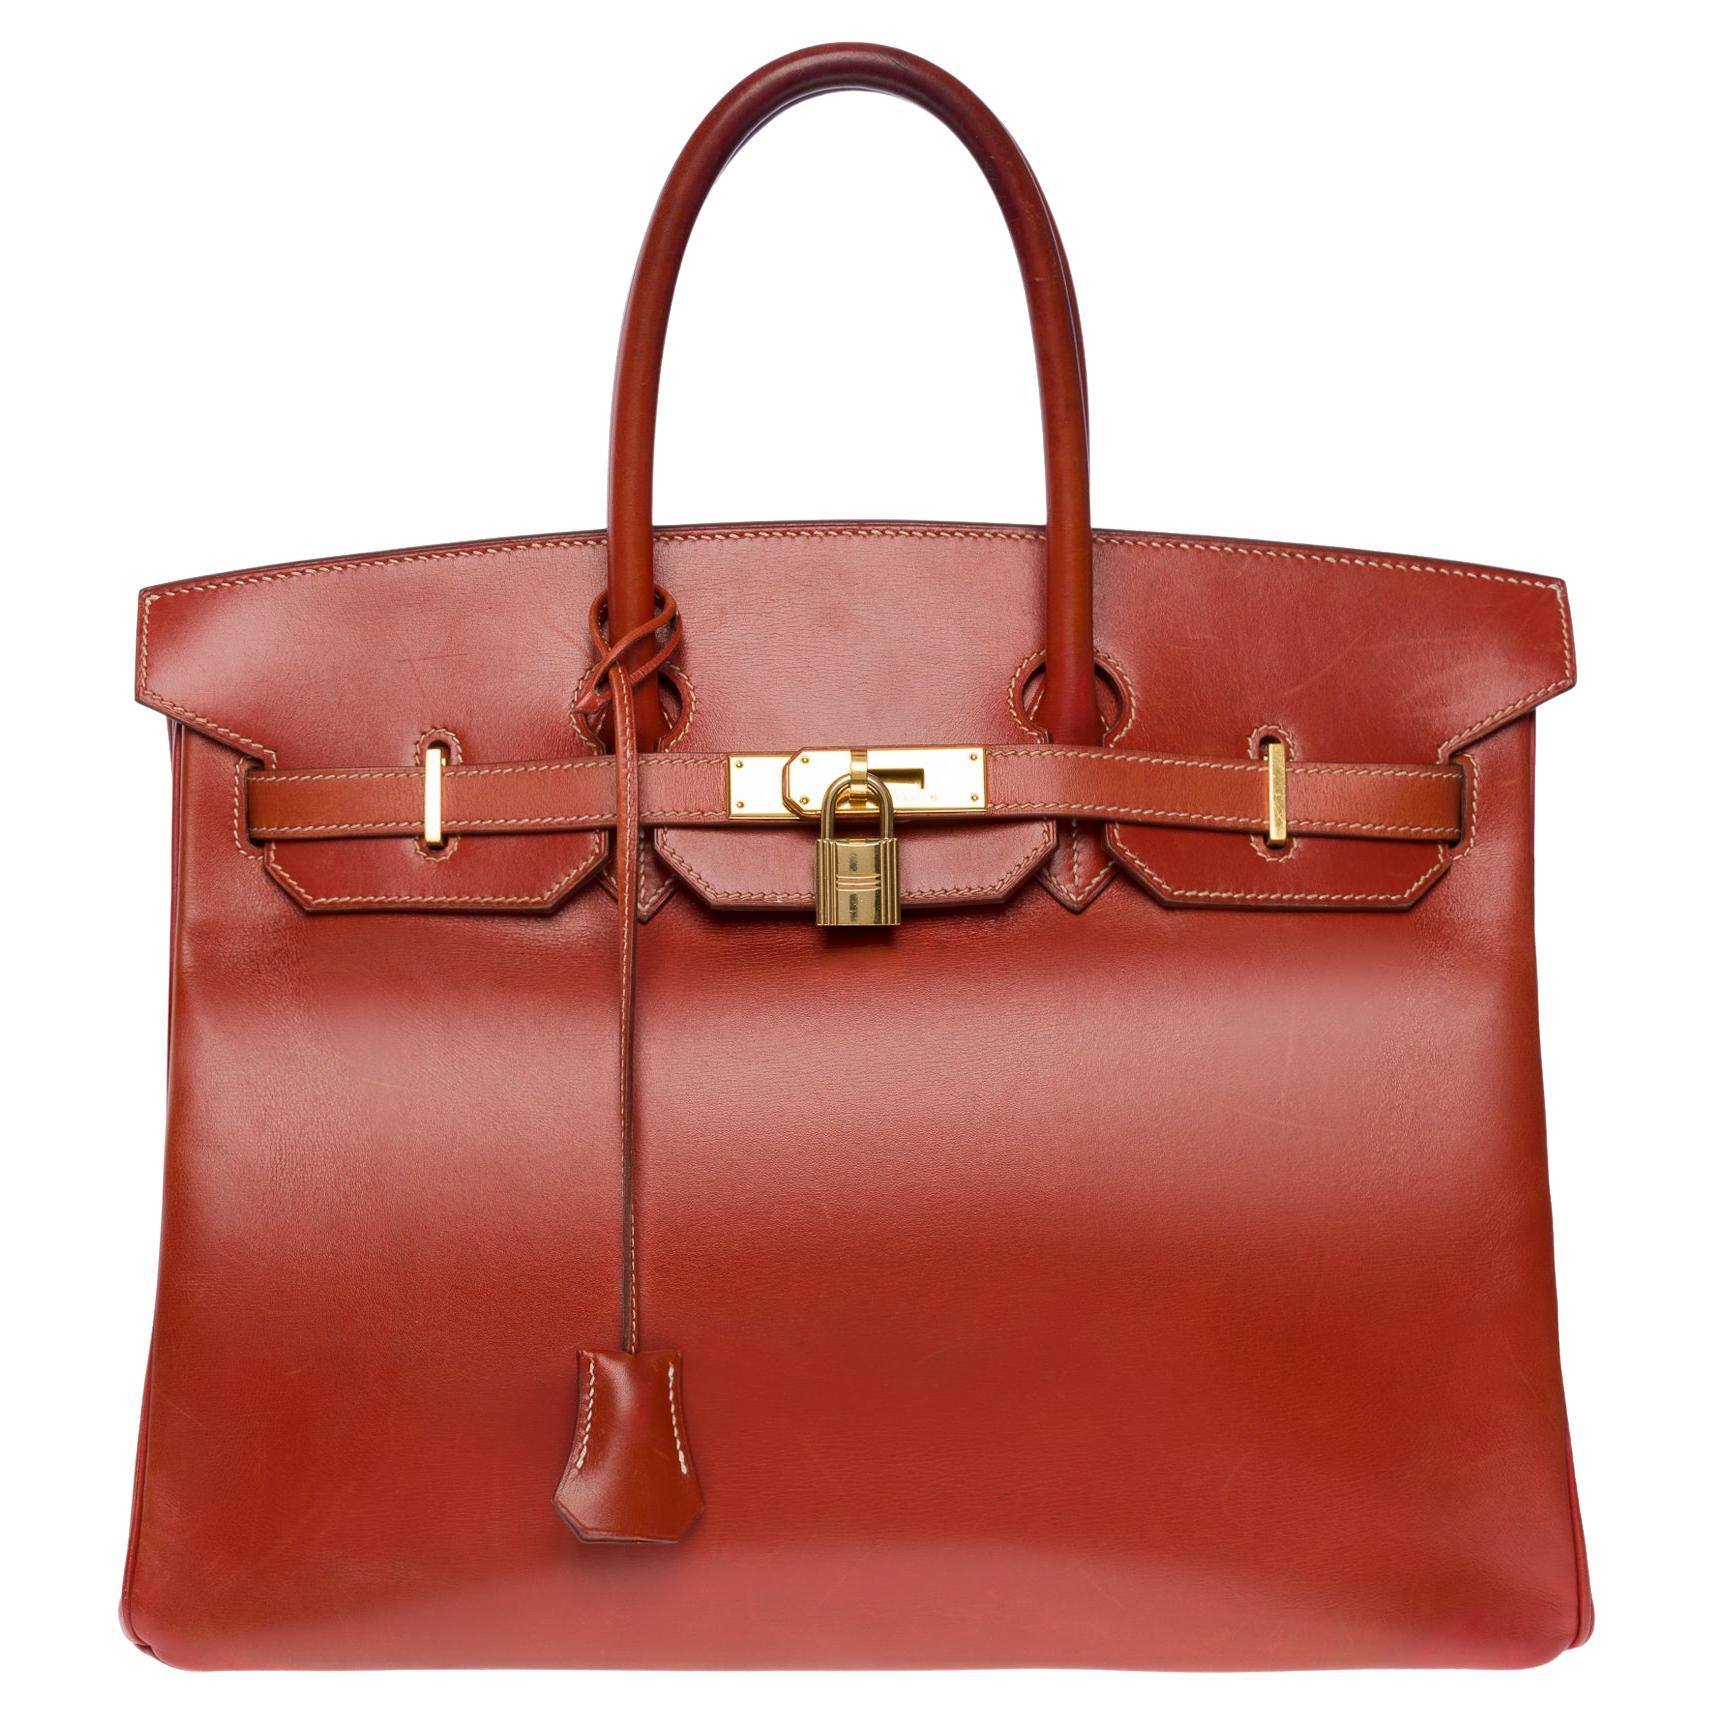 Amazing & Rare Hermès Birkin 35 handbag in Cognac box calfskin leather, GHW